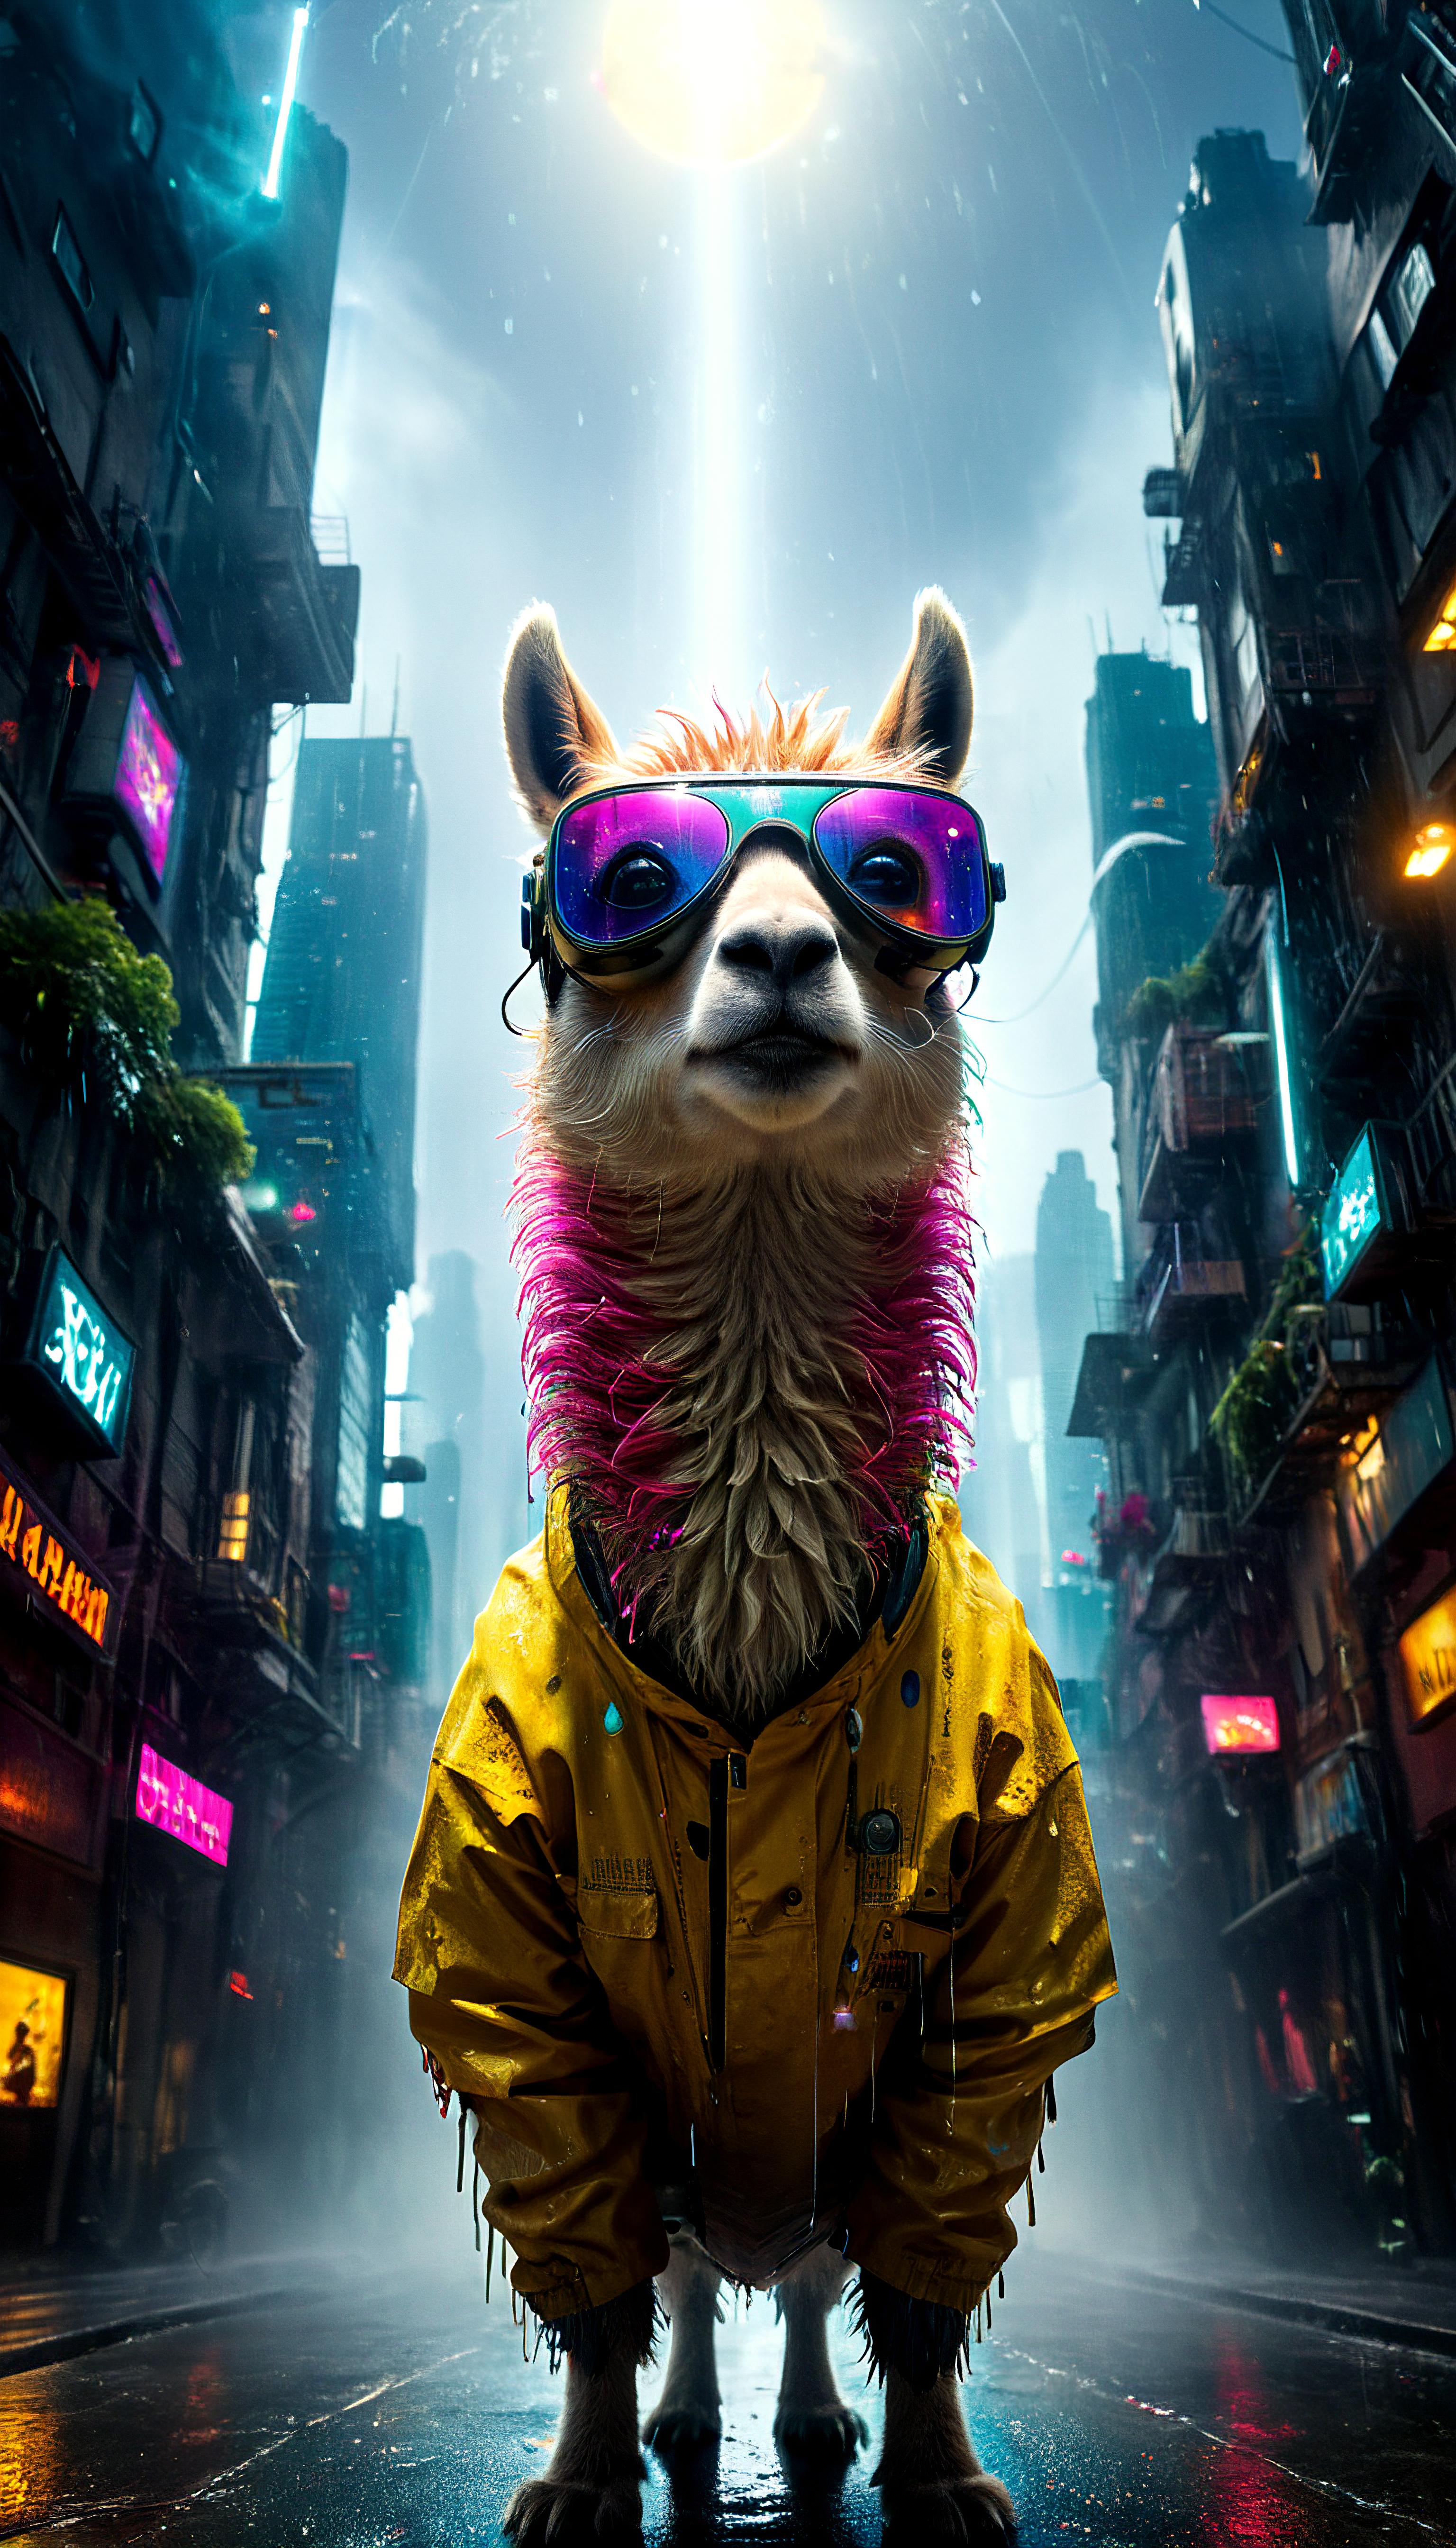 A Llama with a Rainbow Mohawk and Sunglasses in a Futuristic Cityscape